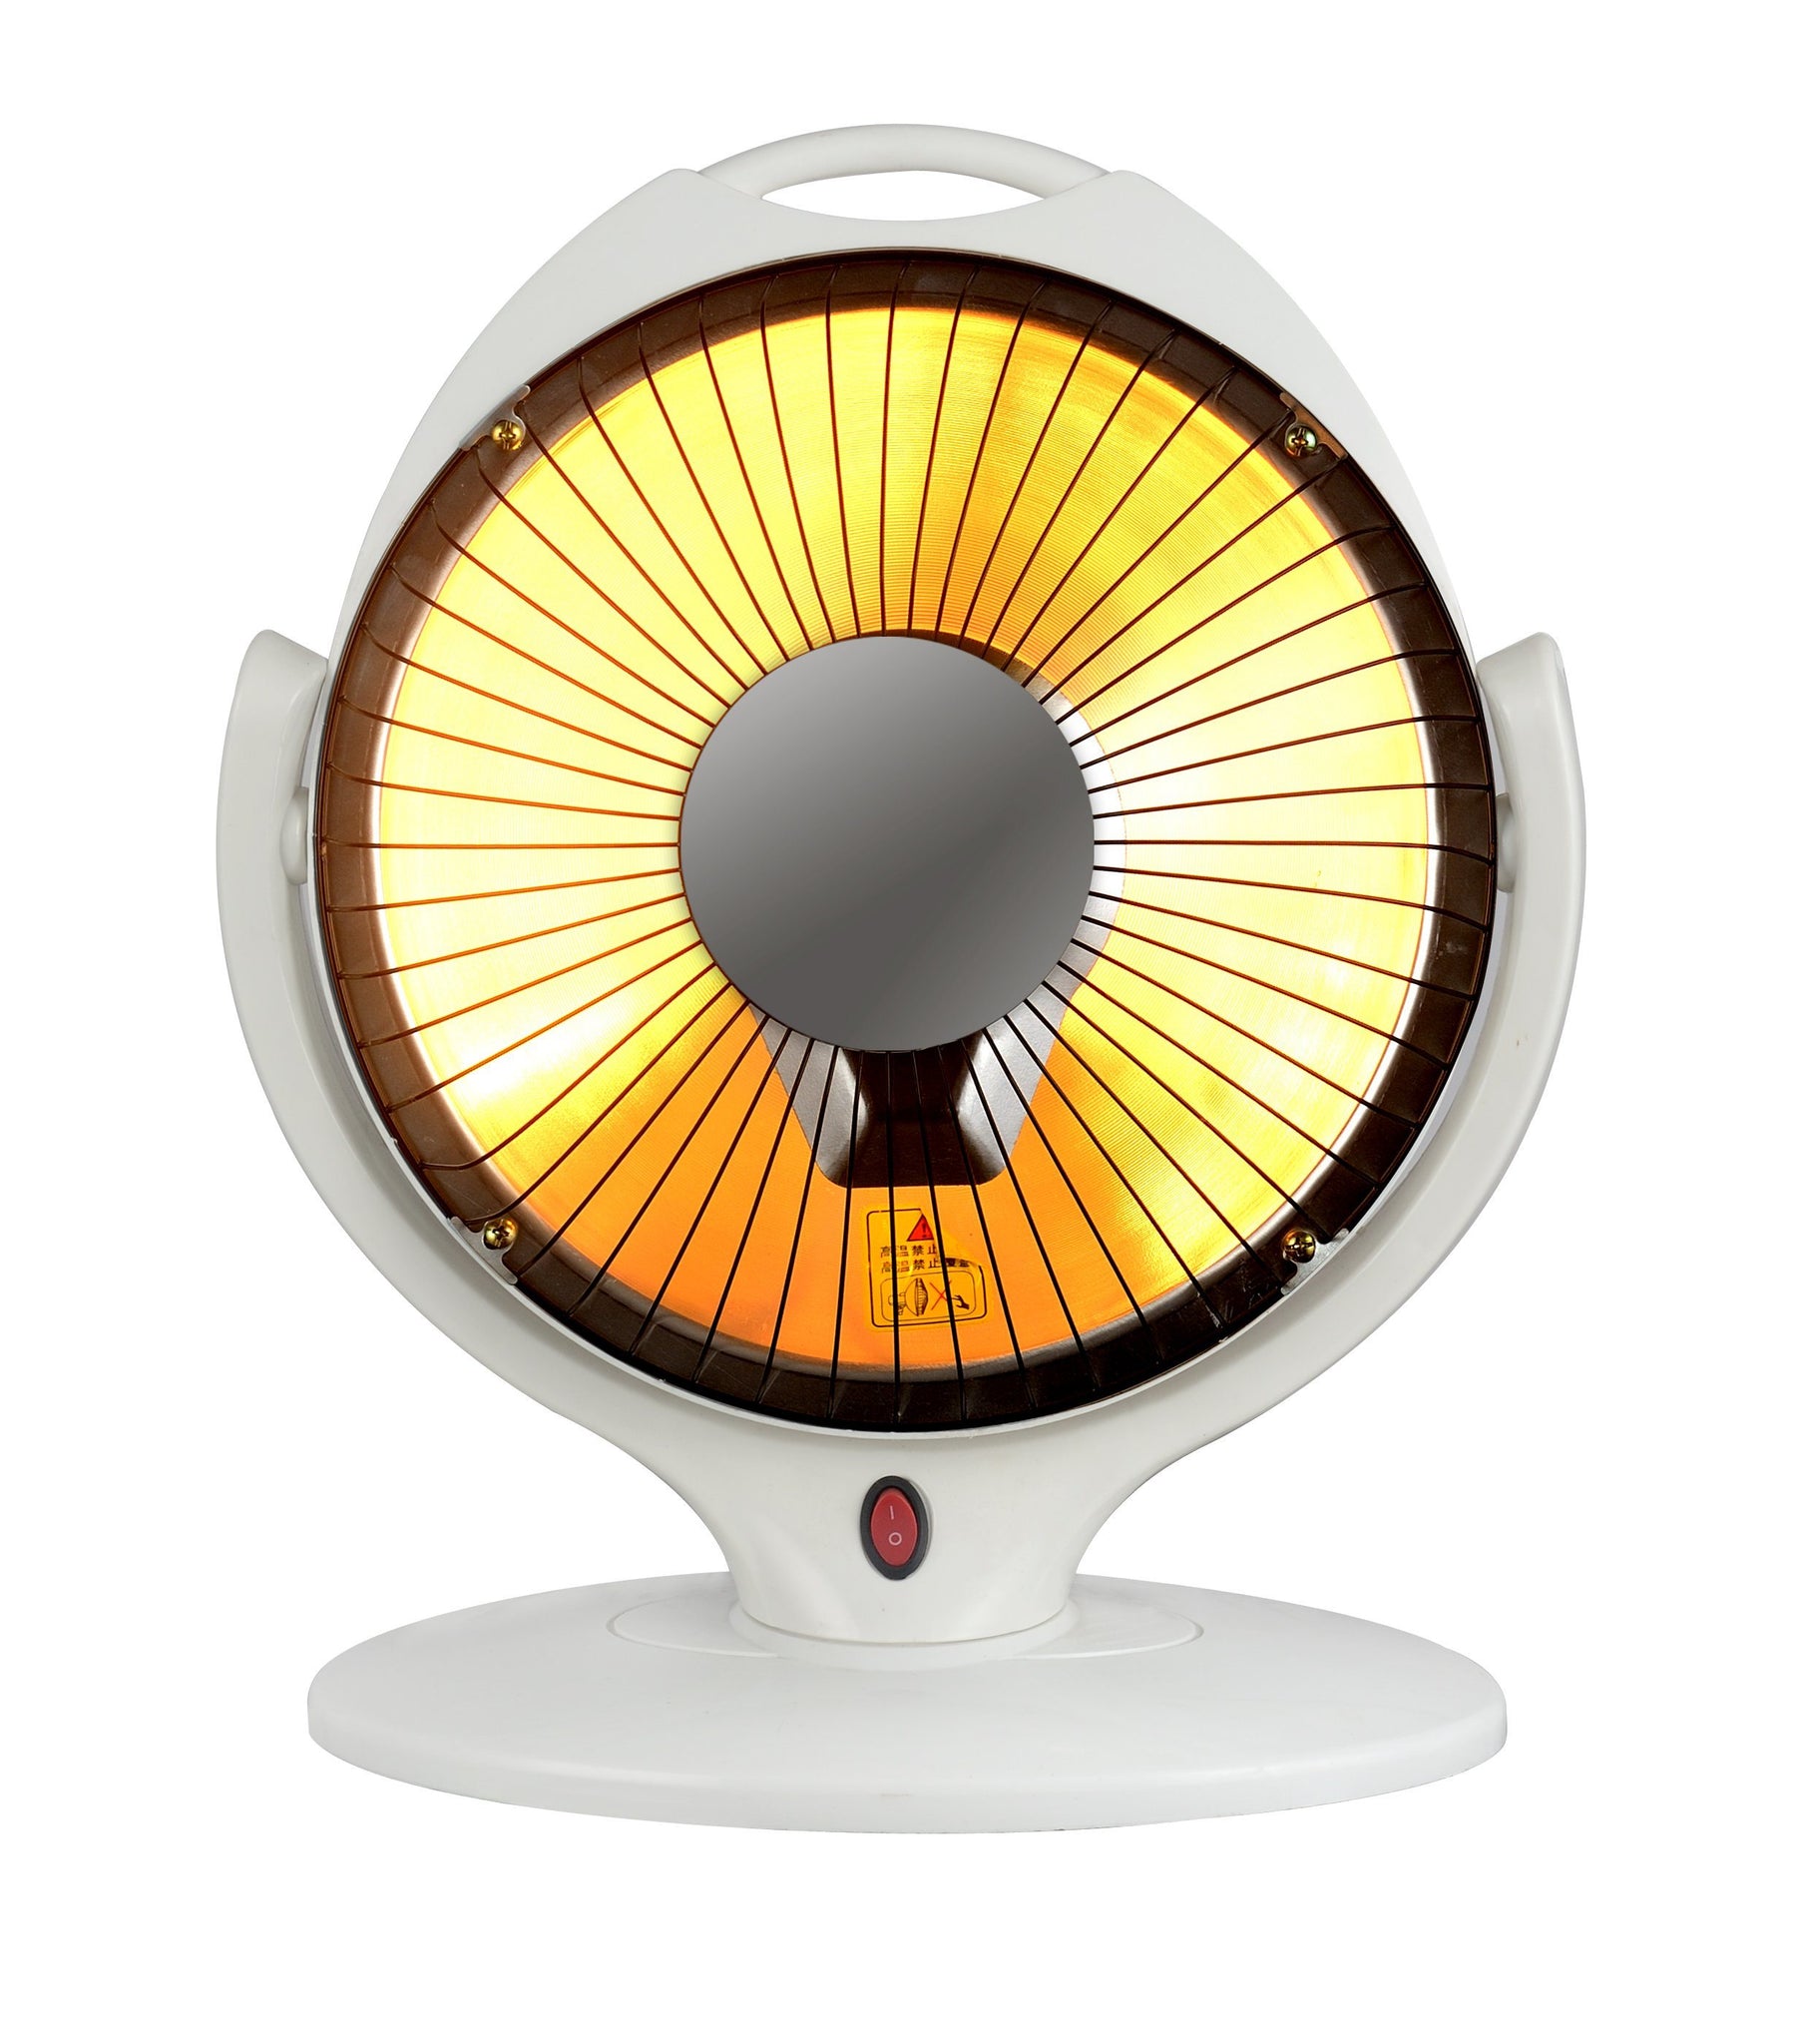 Sanyo Electrical Heater Latest Technology Electrical Heater Fan